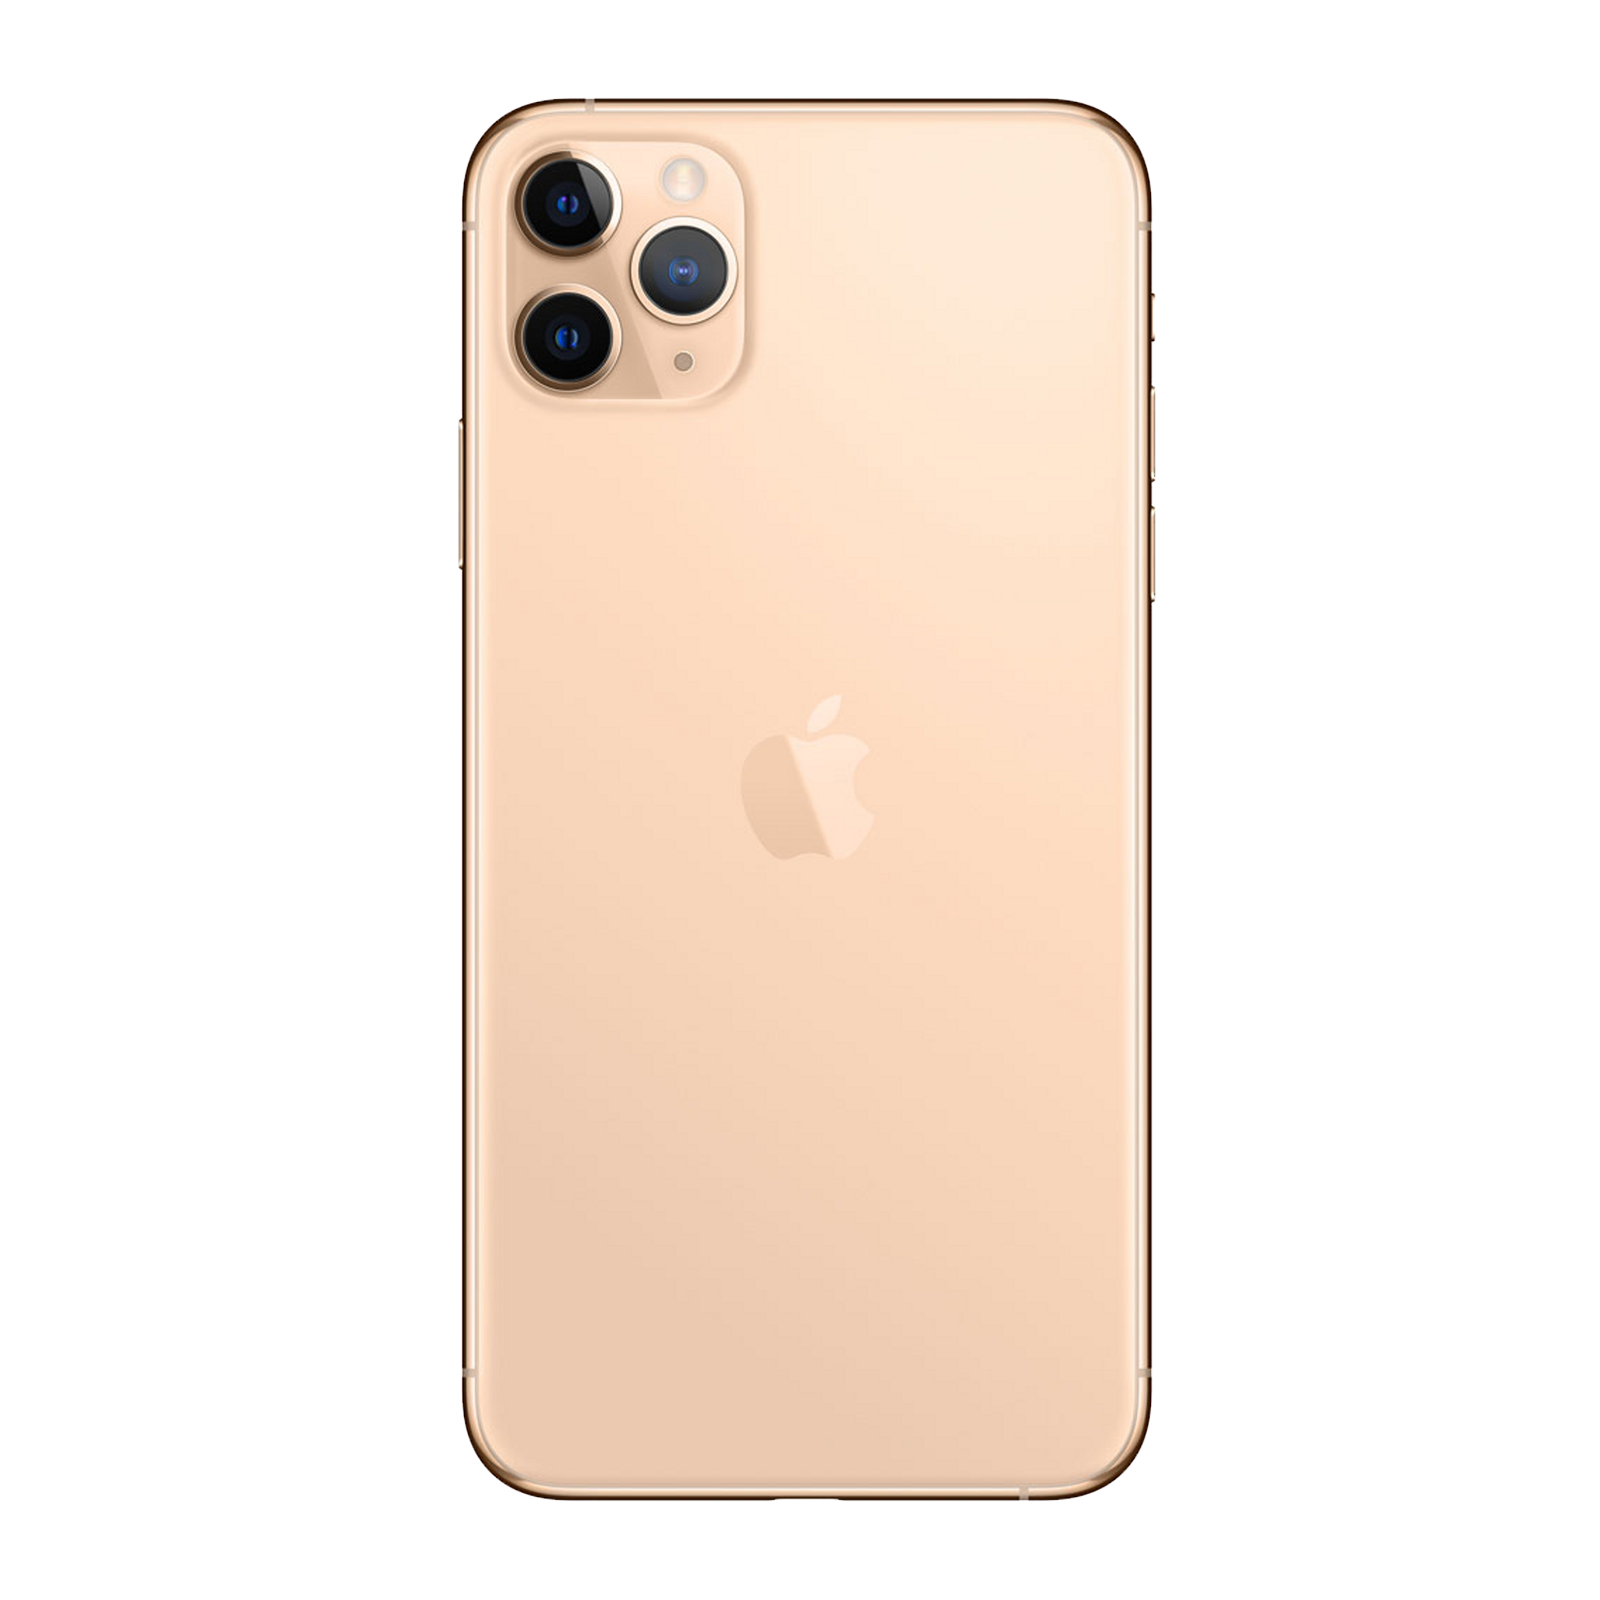 Apple iPhone 11 Pro Max 64GB Gold Very Good - Sprint